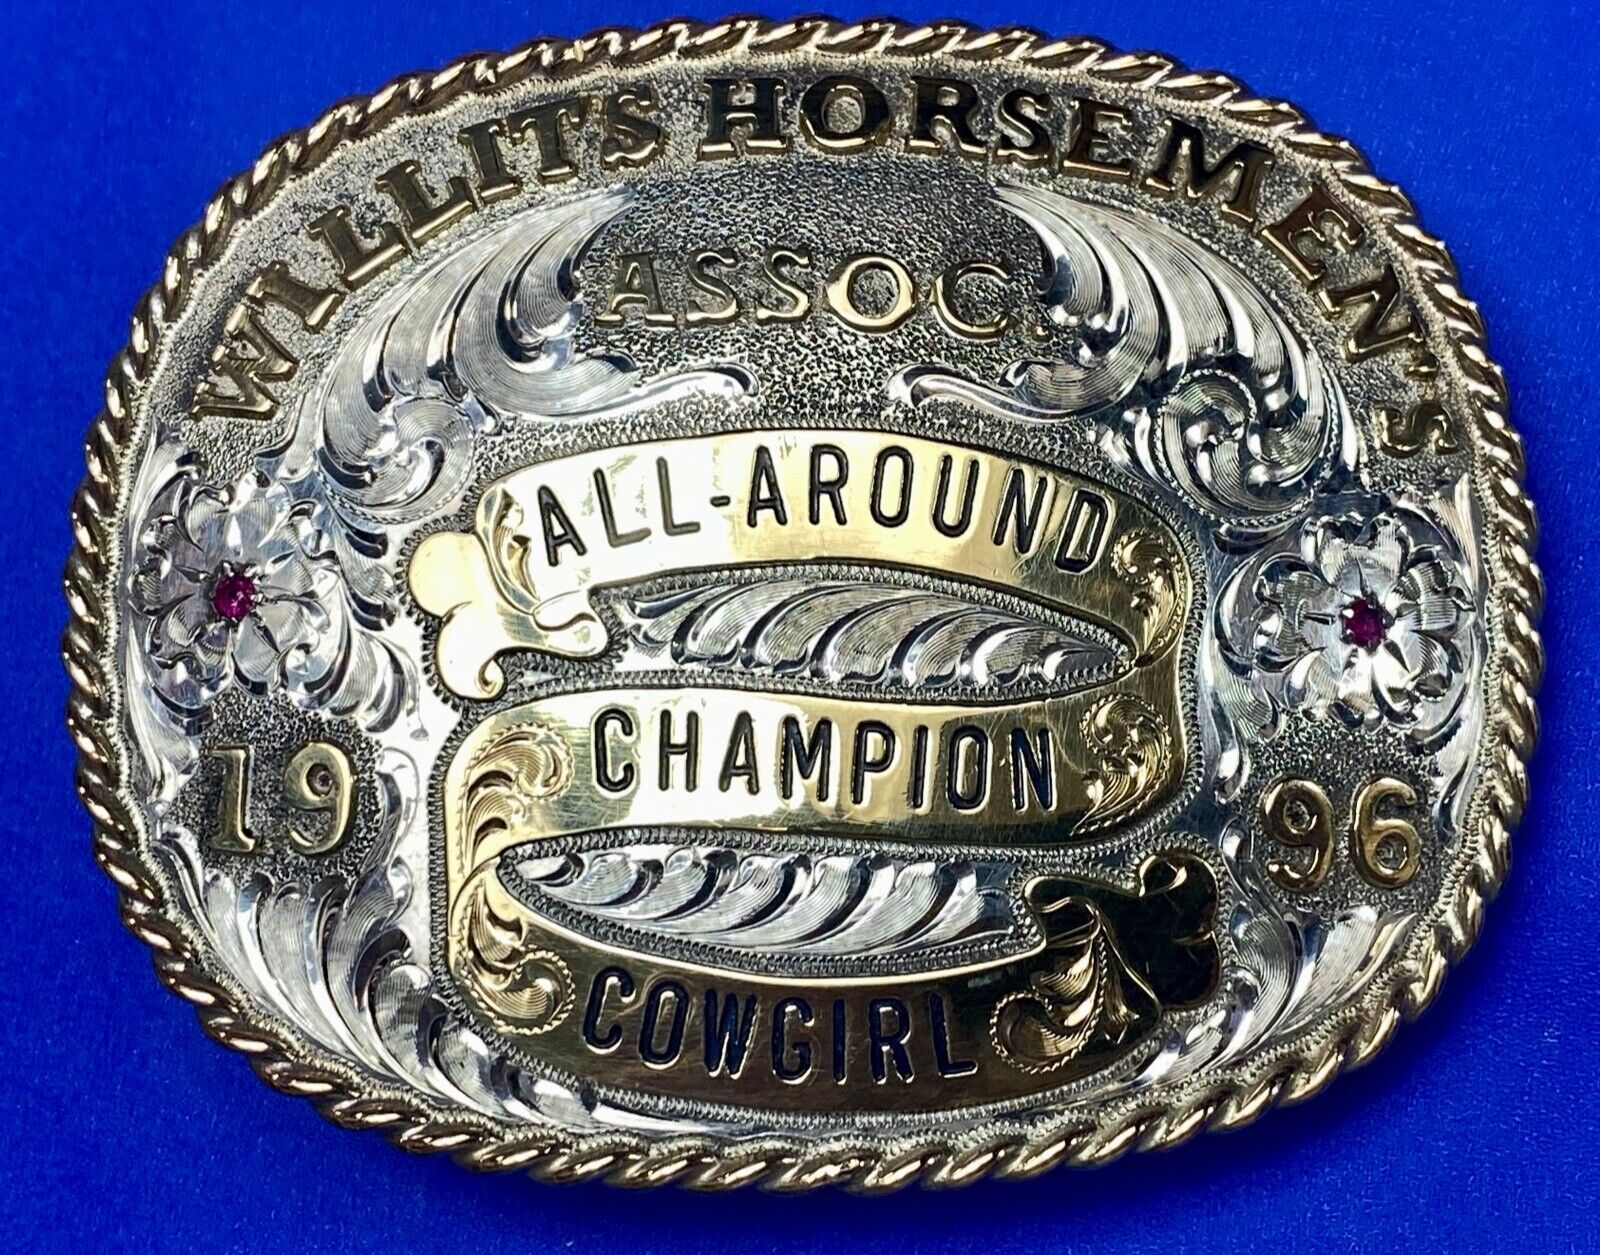 All Around Champion Cowgirl Willits Horsemen\'s Assoc 96 Trophy belt buckle by Gj